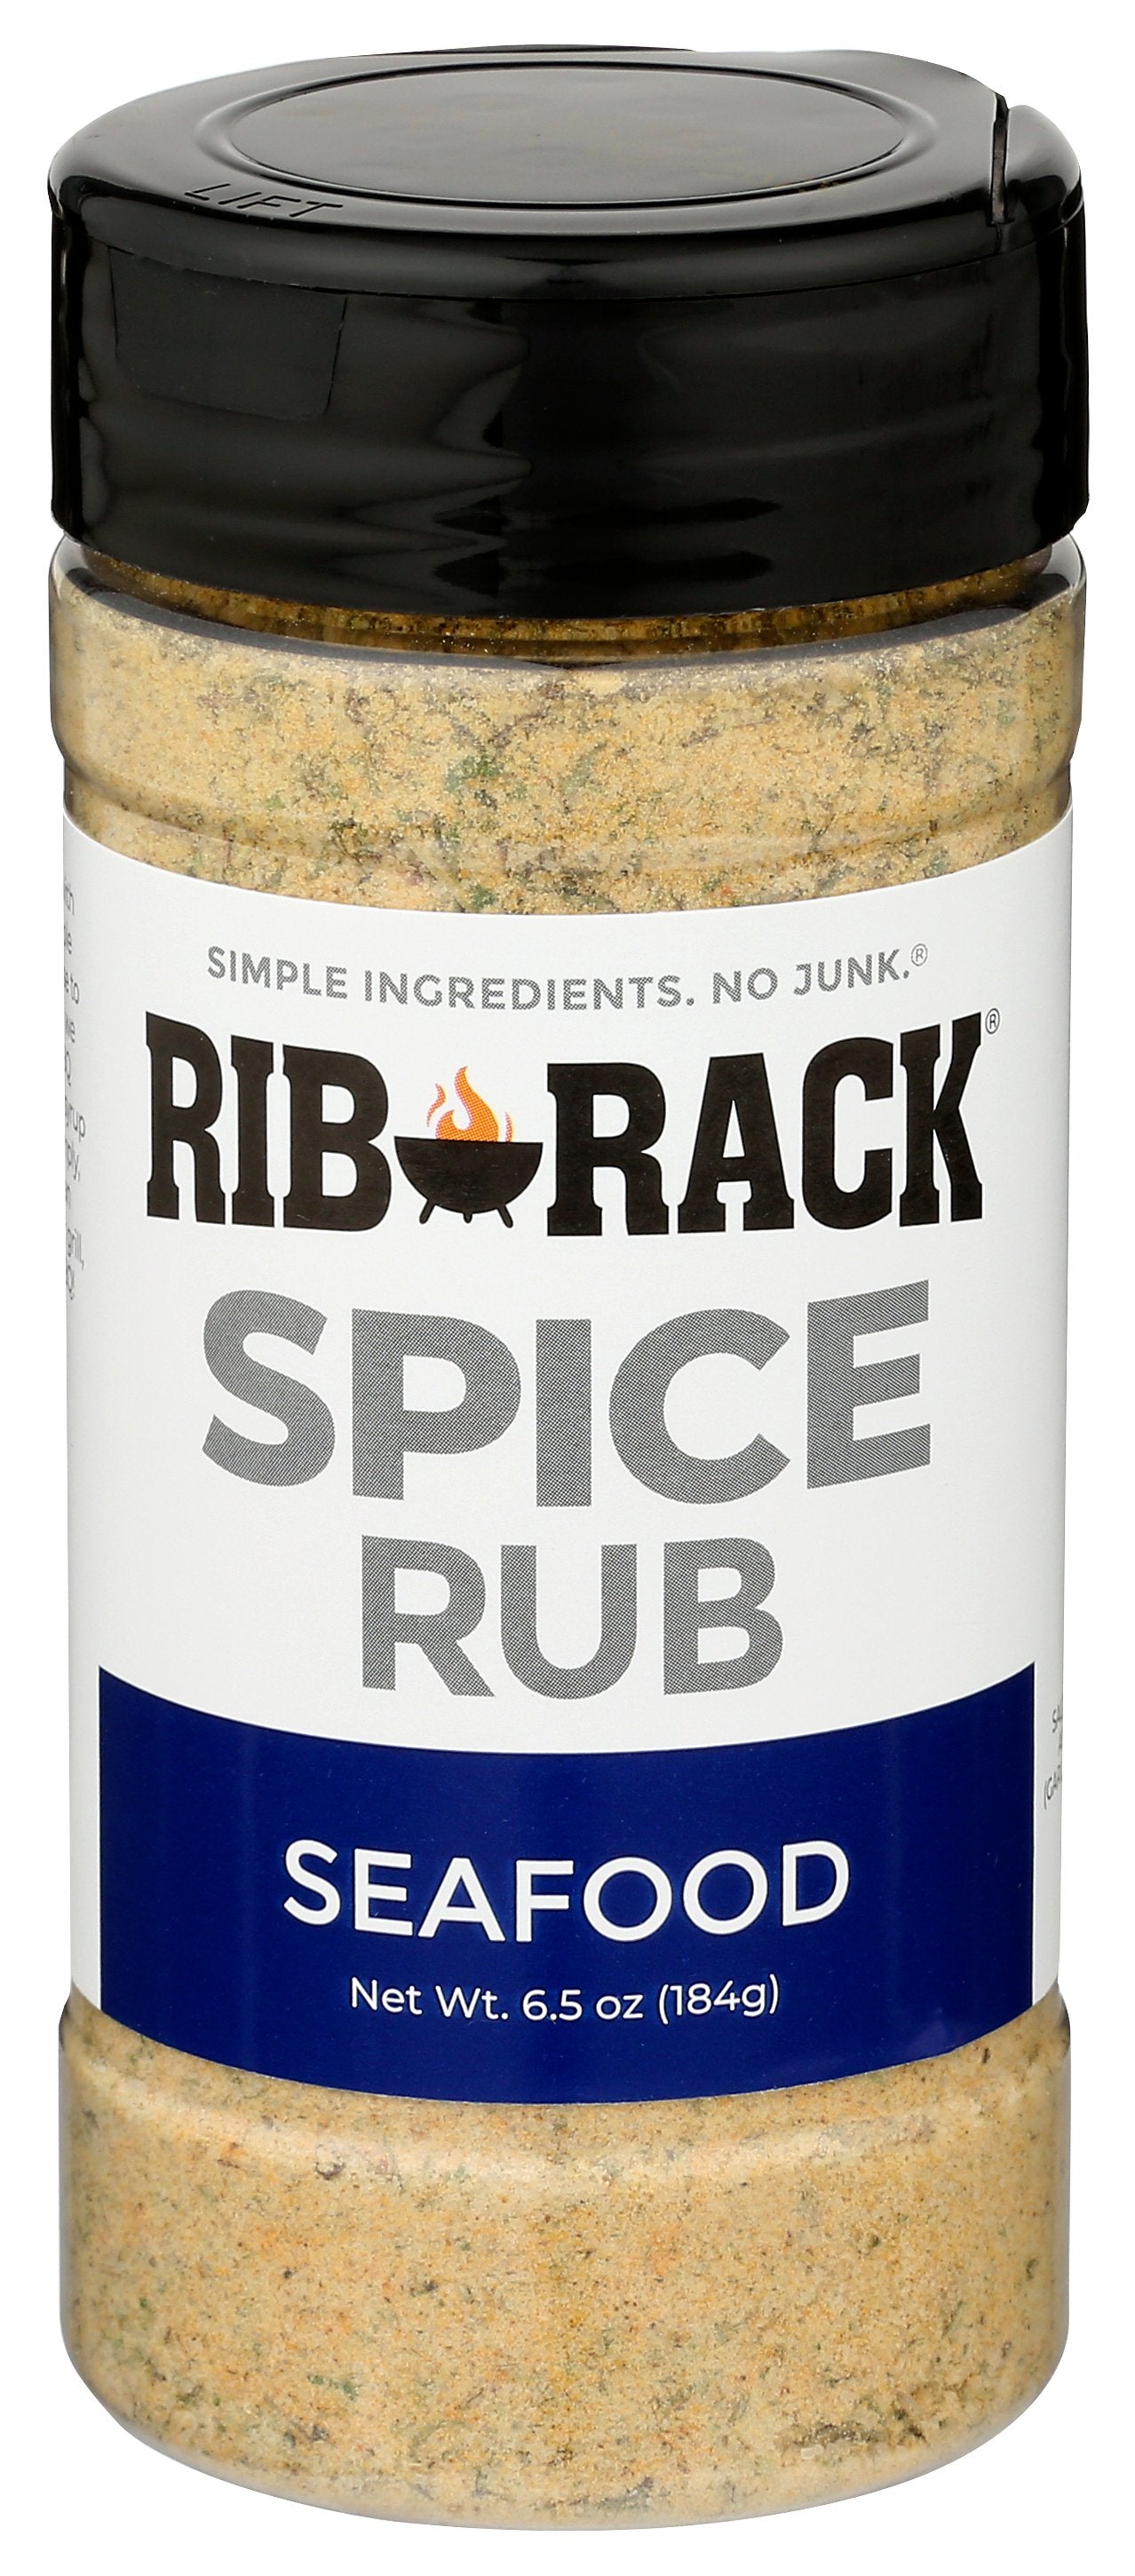 RIB RACK RUB SEAFOOD SPICE - Case of 6